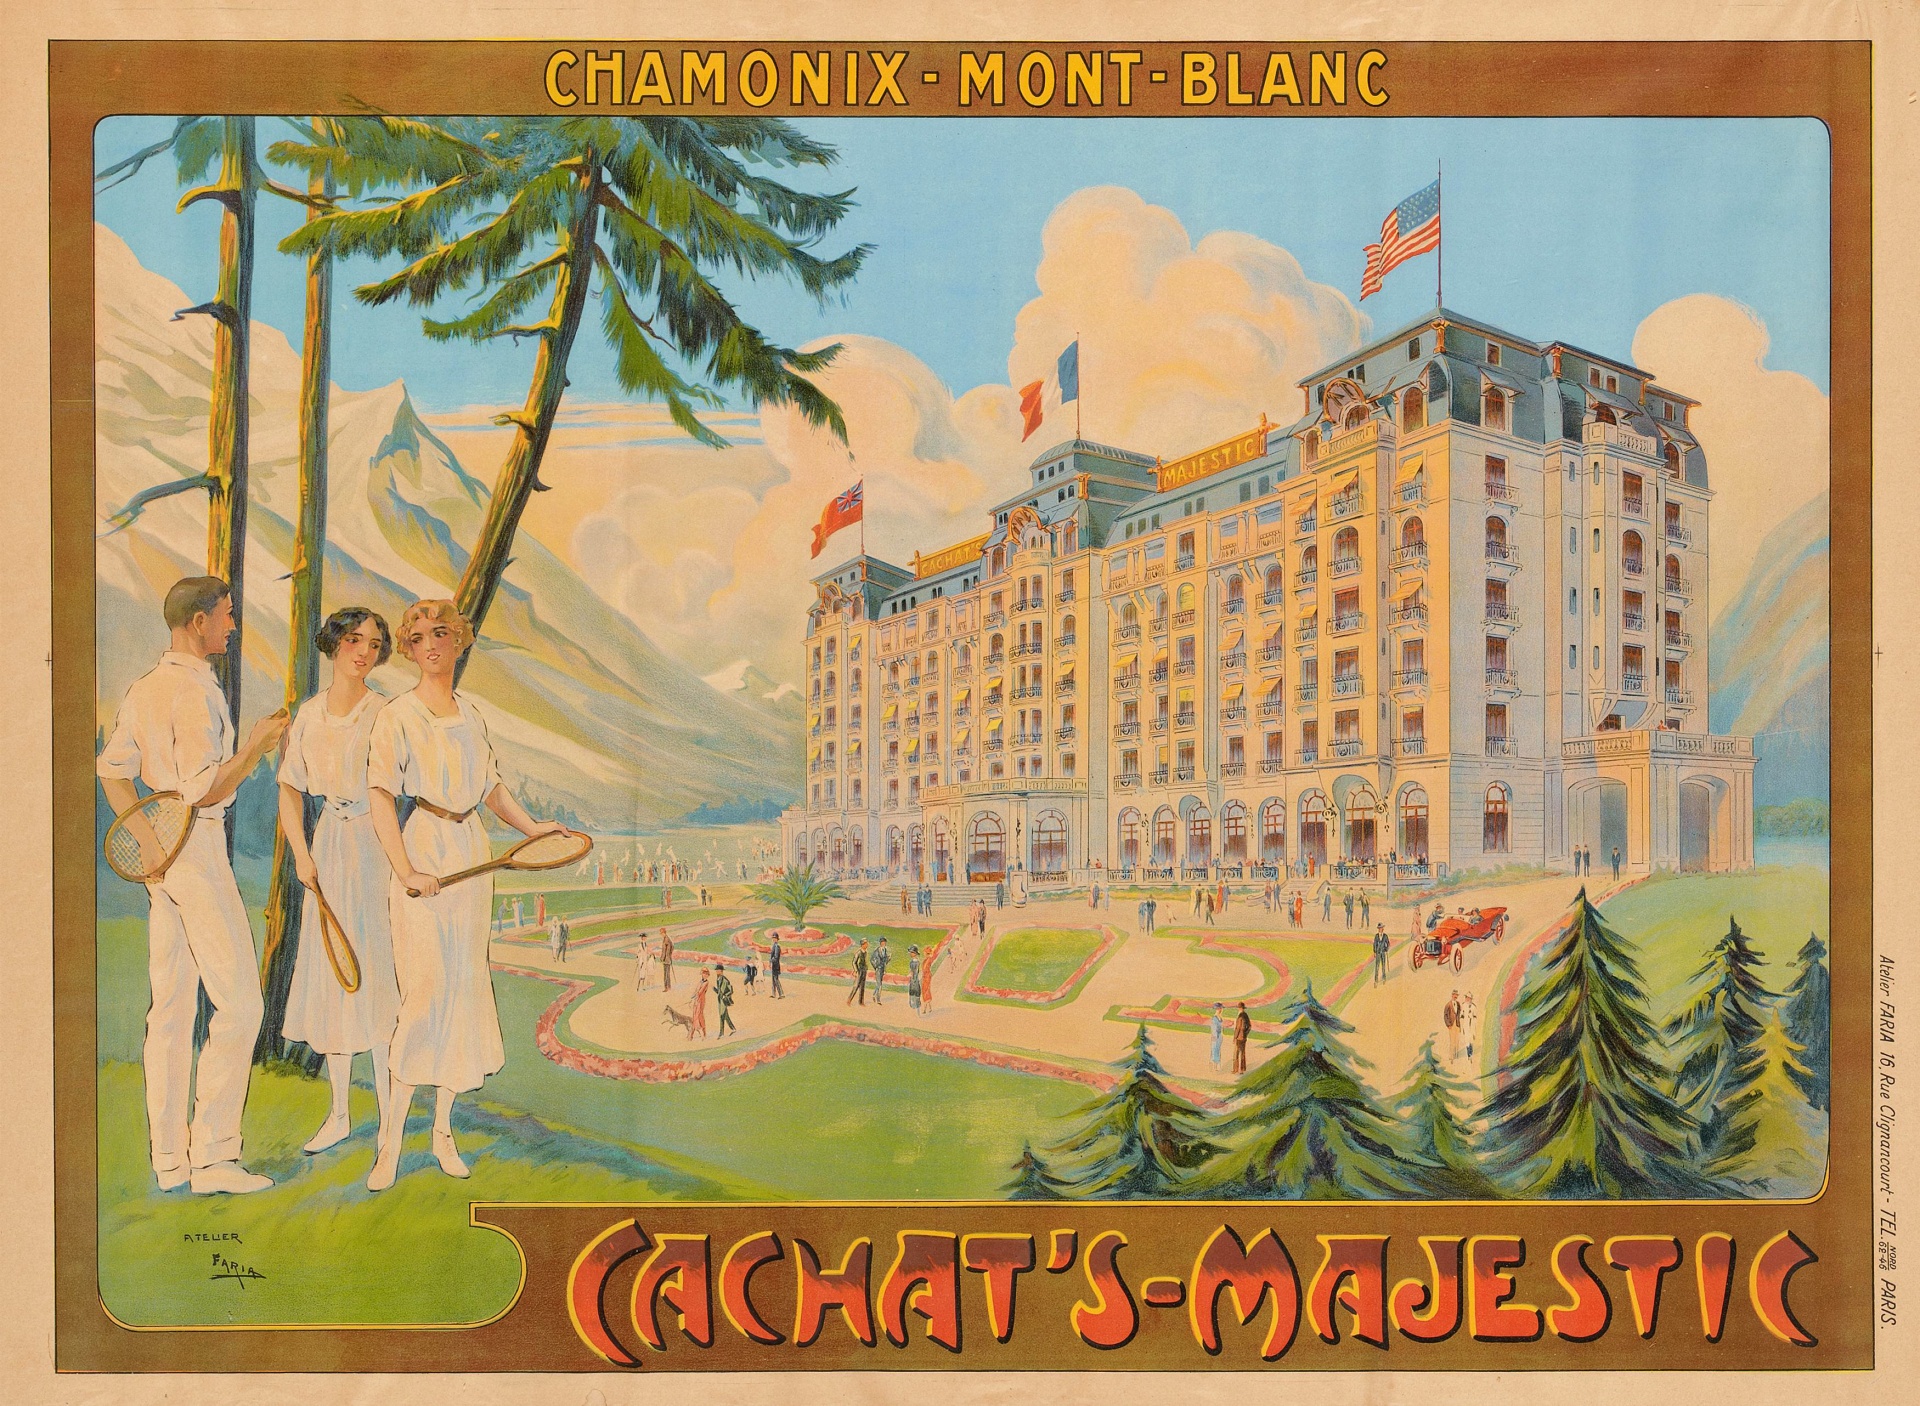 Vintage travel poster, print for Chamonix, Mont Blanc, France